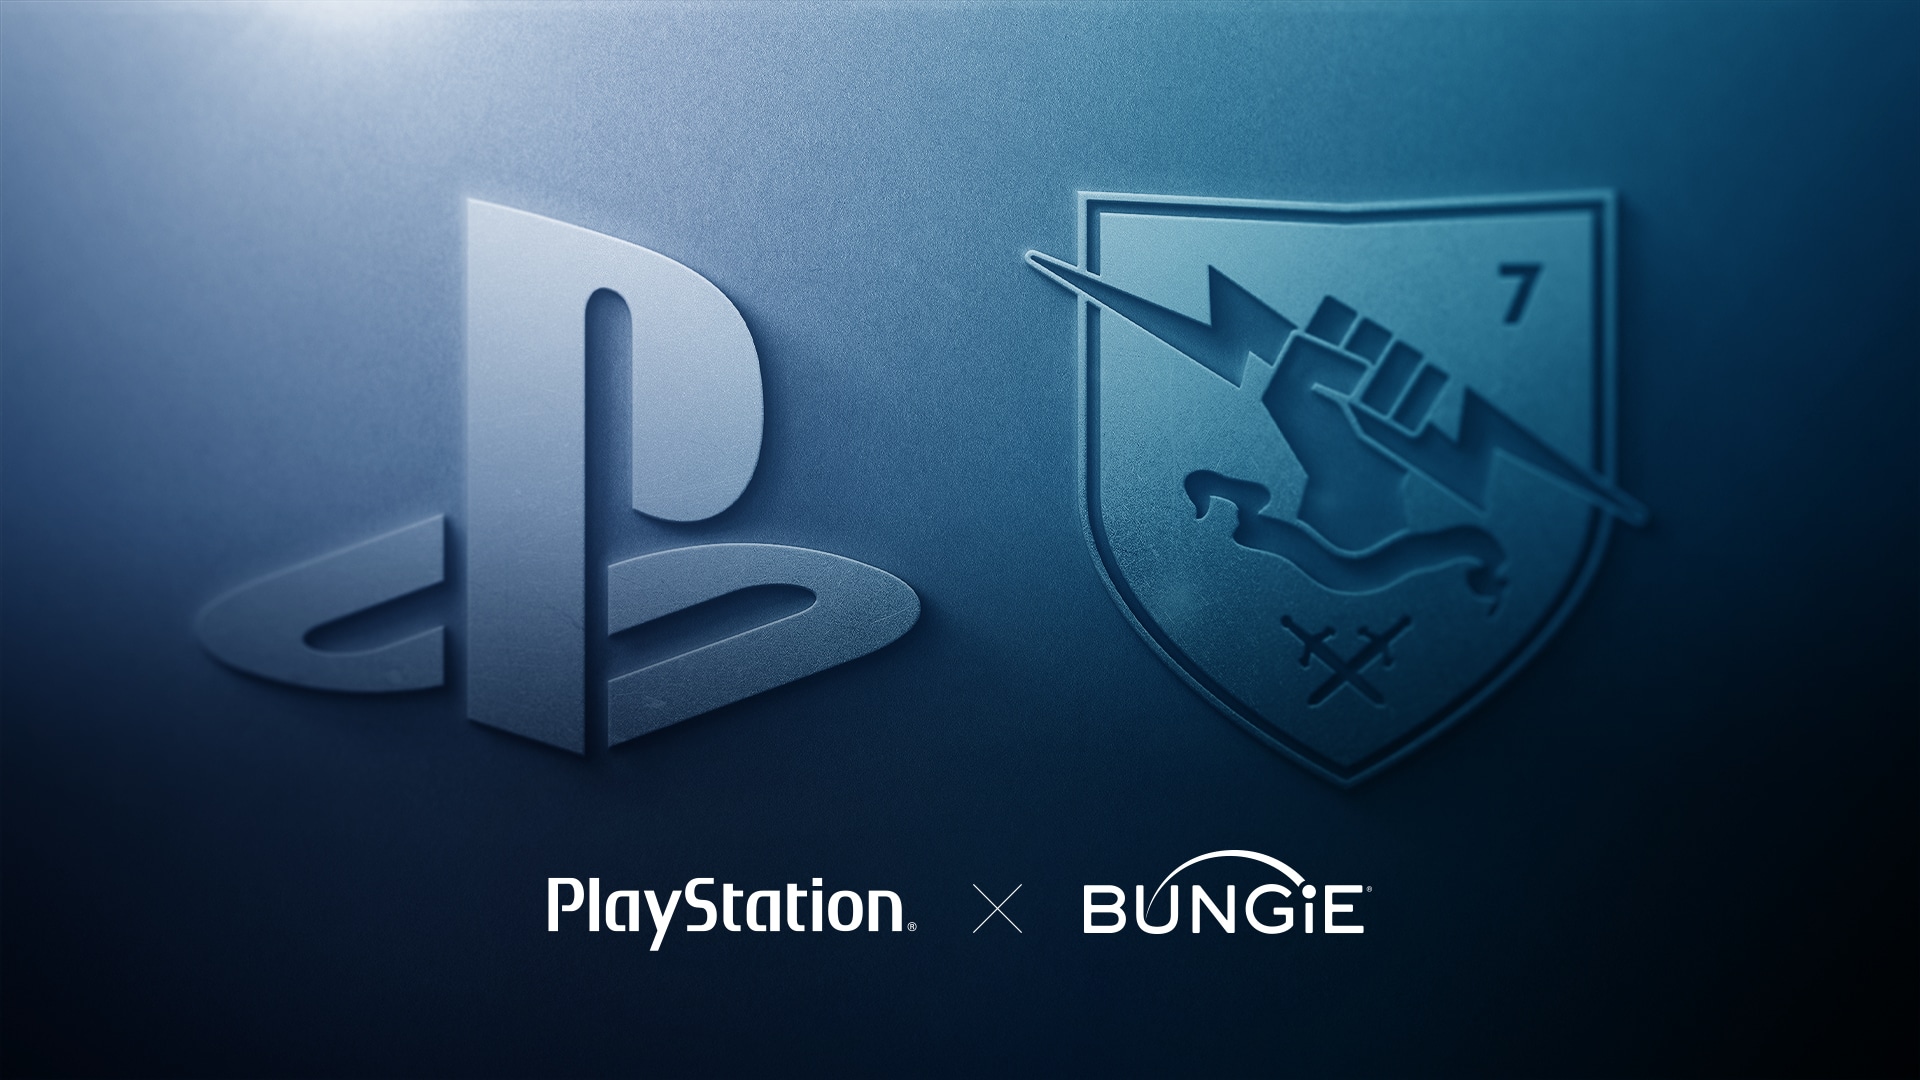 Sony Interactive Entertainment Acquires Destiny Developer Bungie for $3.6 BN